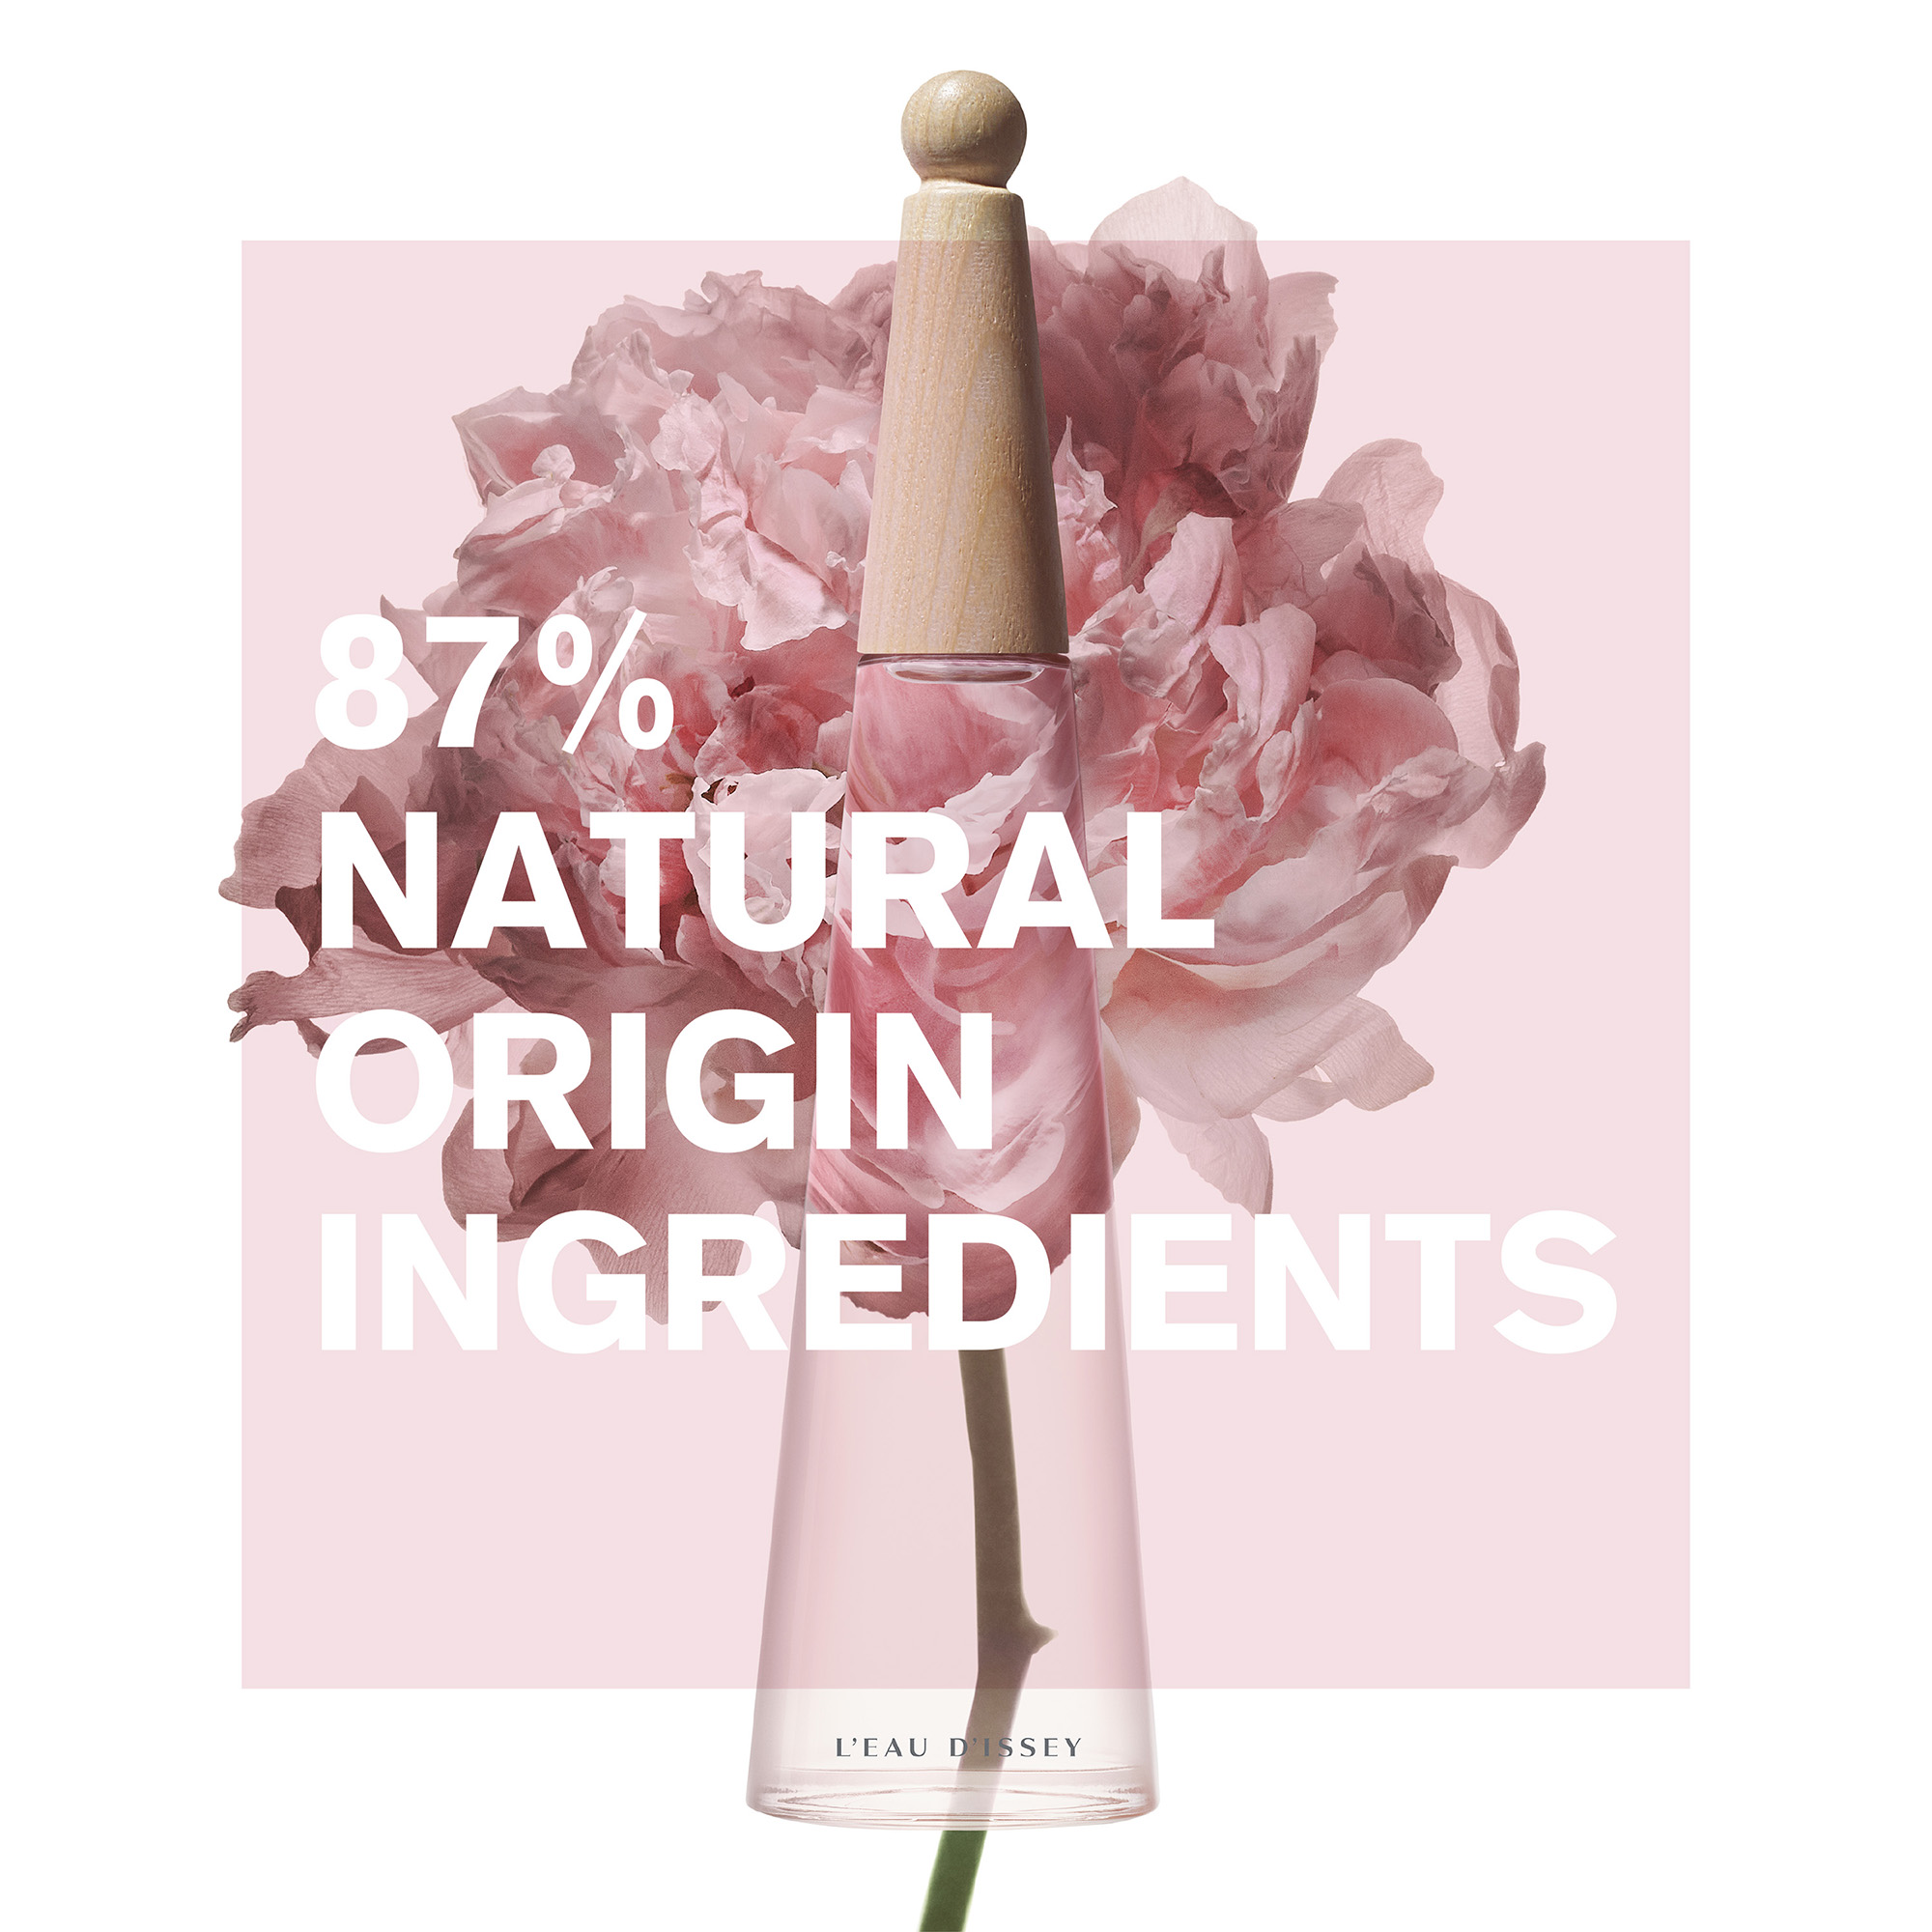 Pivoine Intense is made from 87% natural origin ingredients